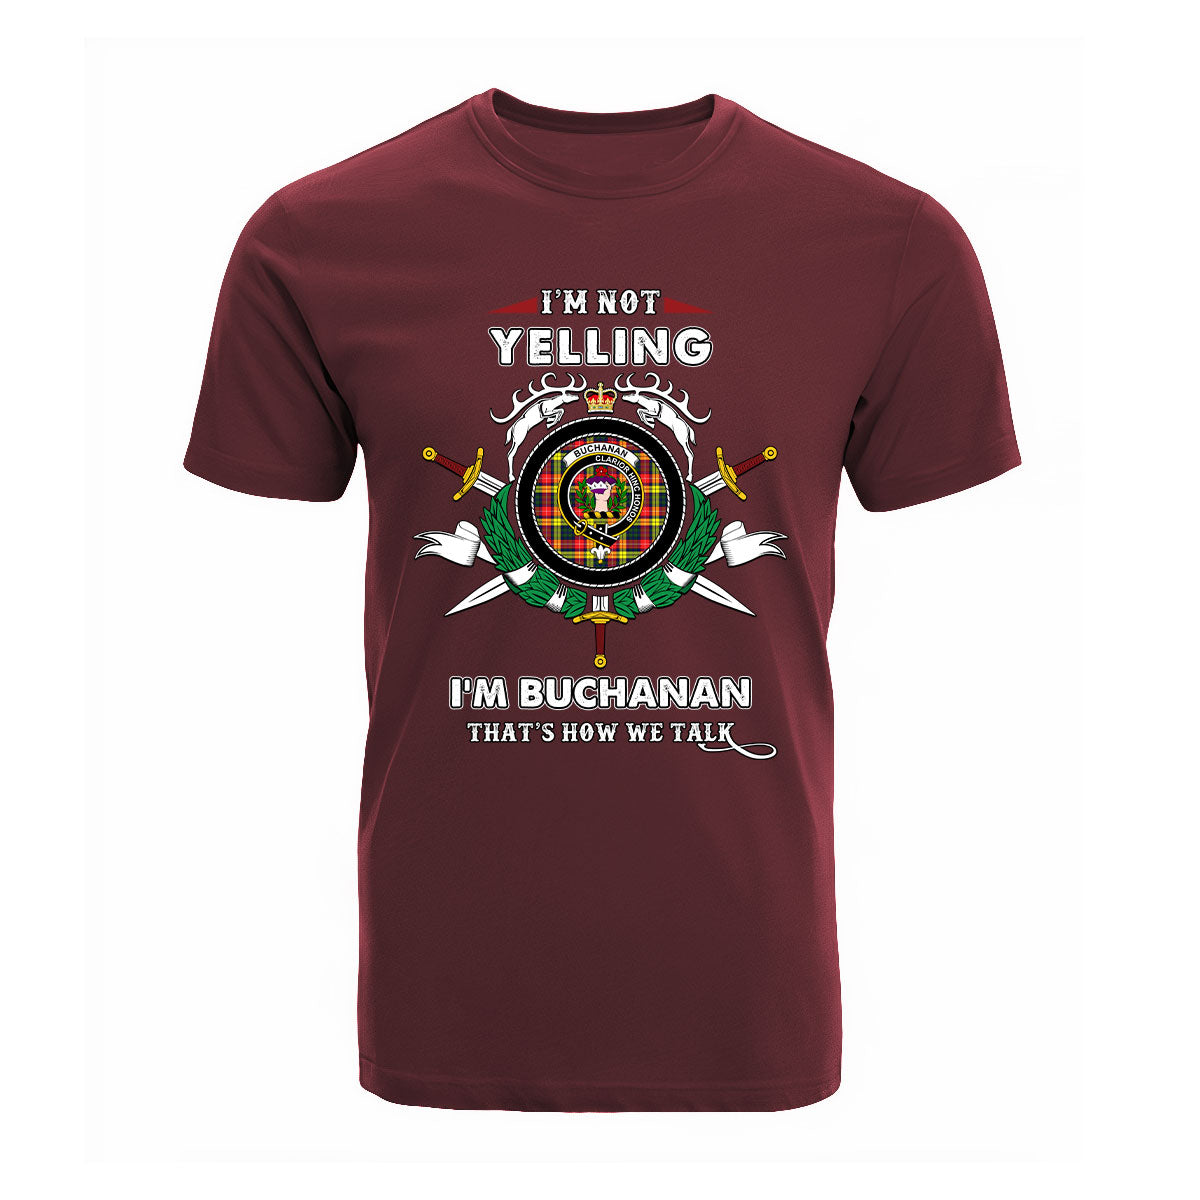 Buchanan Tartan Crest T-shirt - I'm not yelling style